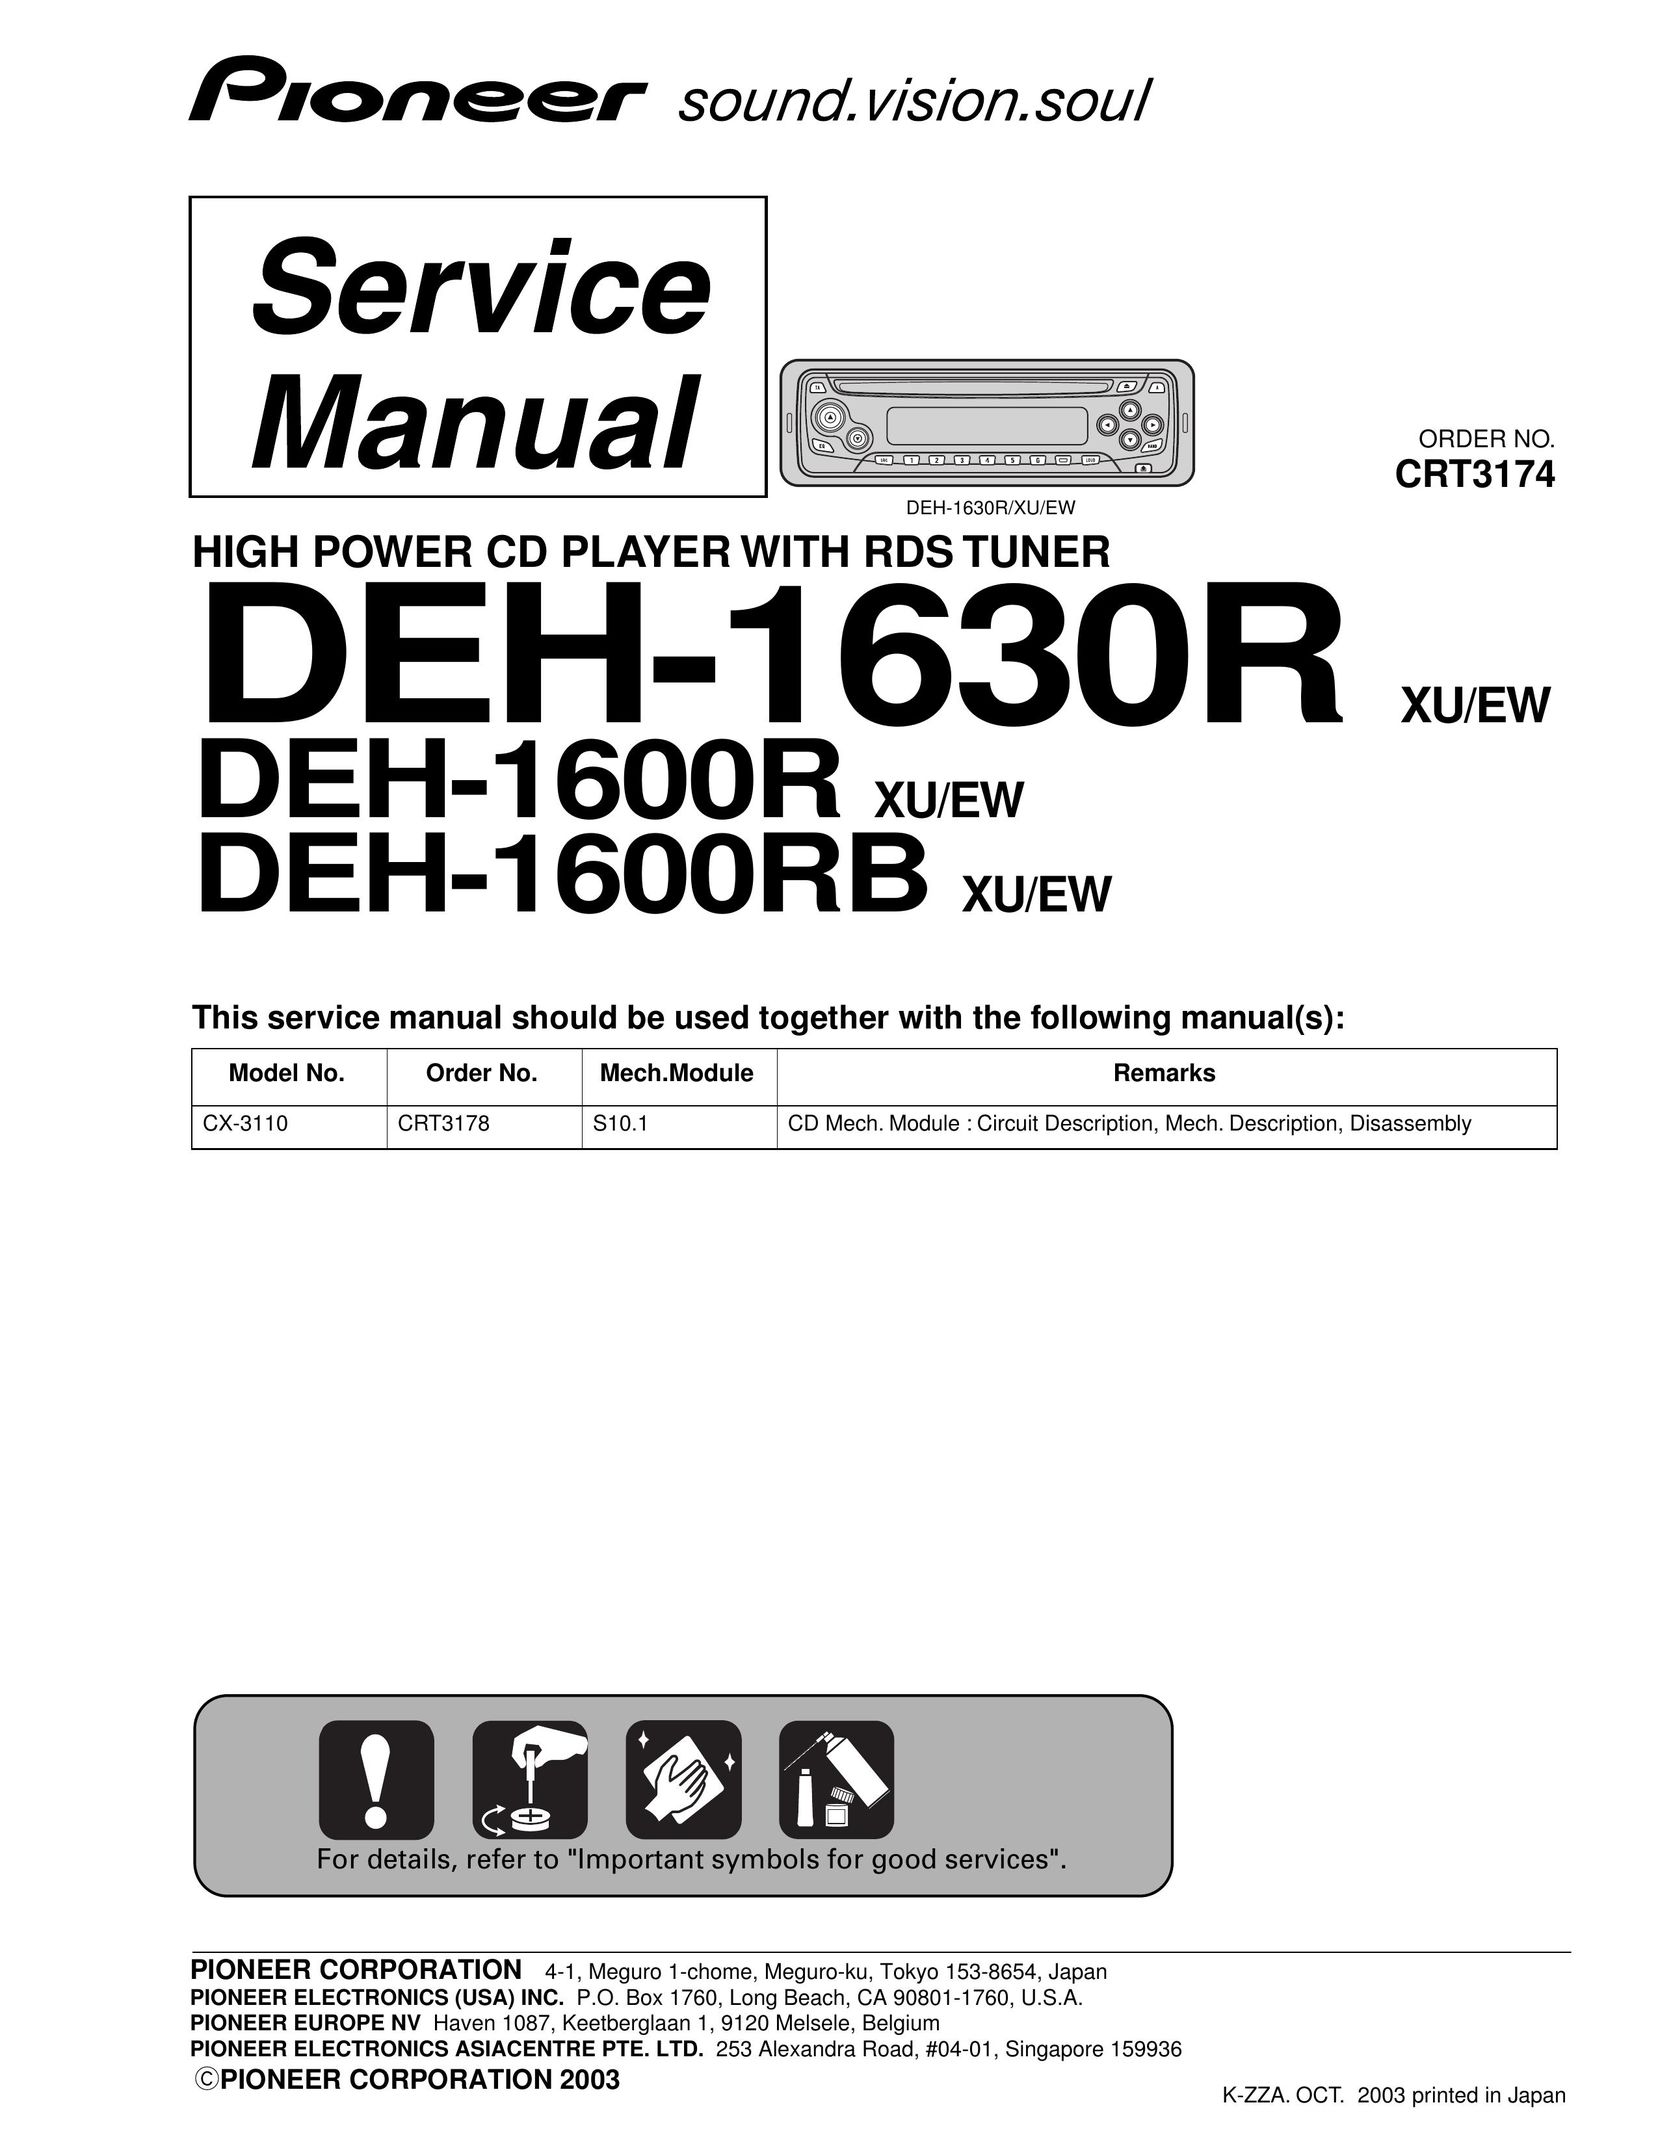 Pioneer DEH-1600RB CD Player User Manual